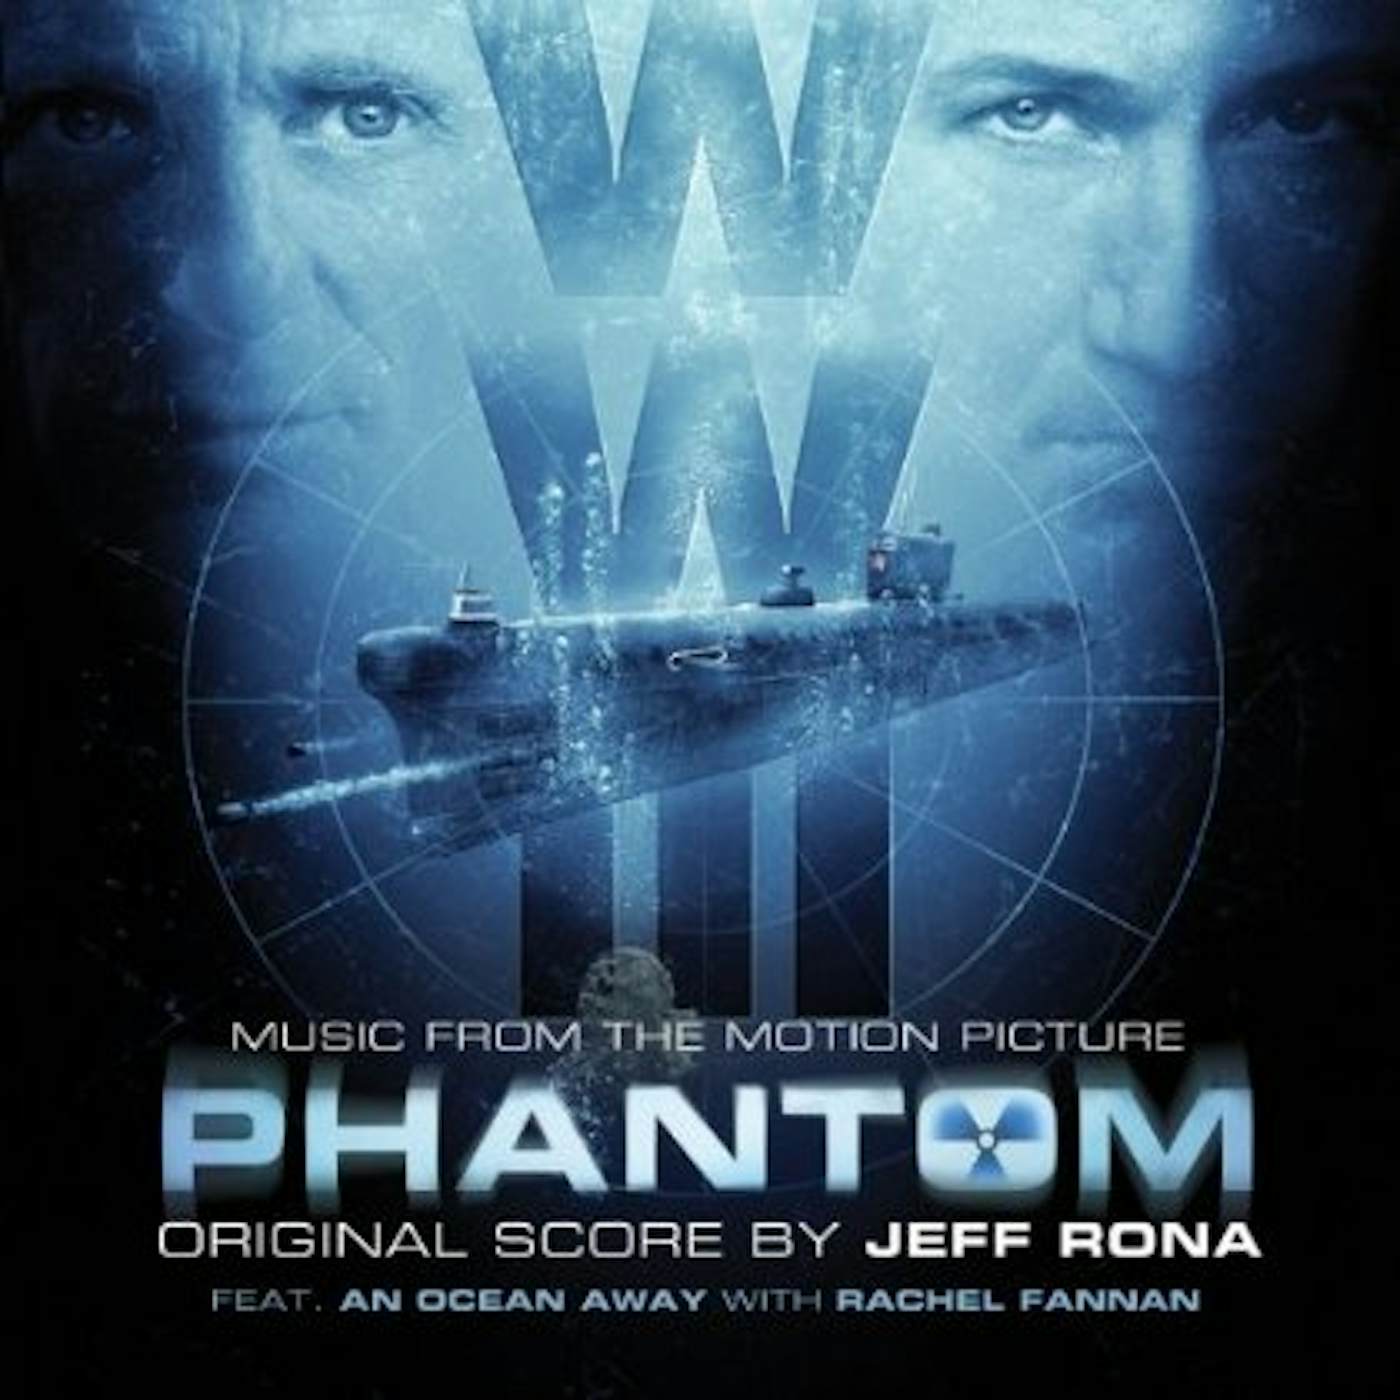 Jeff Rona PHANTOM (SCORE) / Original Soundtrack CD